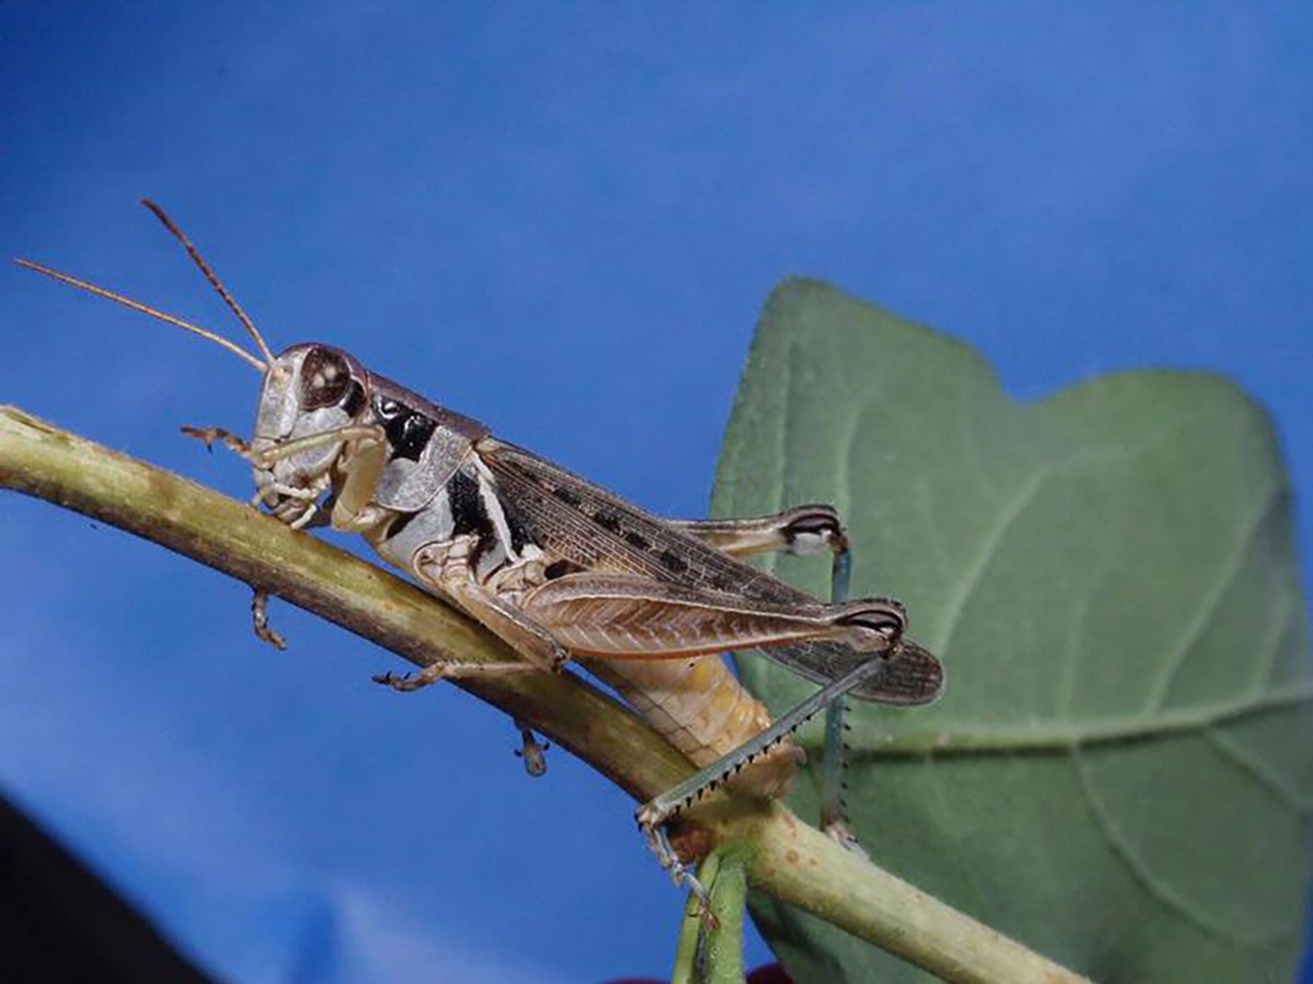 Migratory grasshopper (Melanoplus sanguinipes)